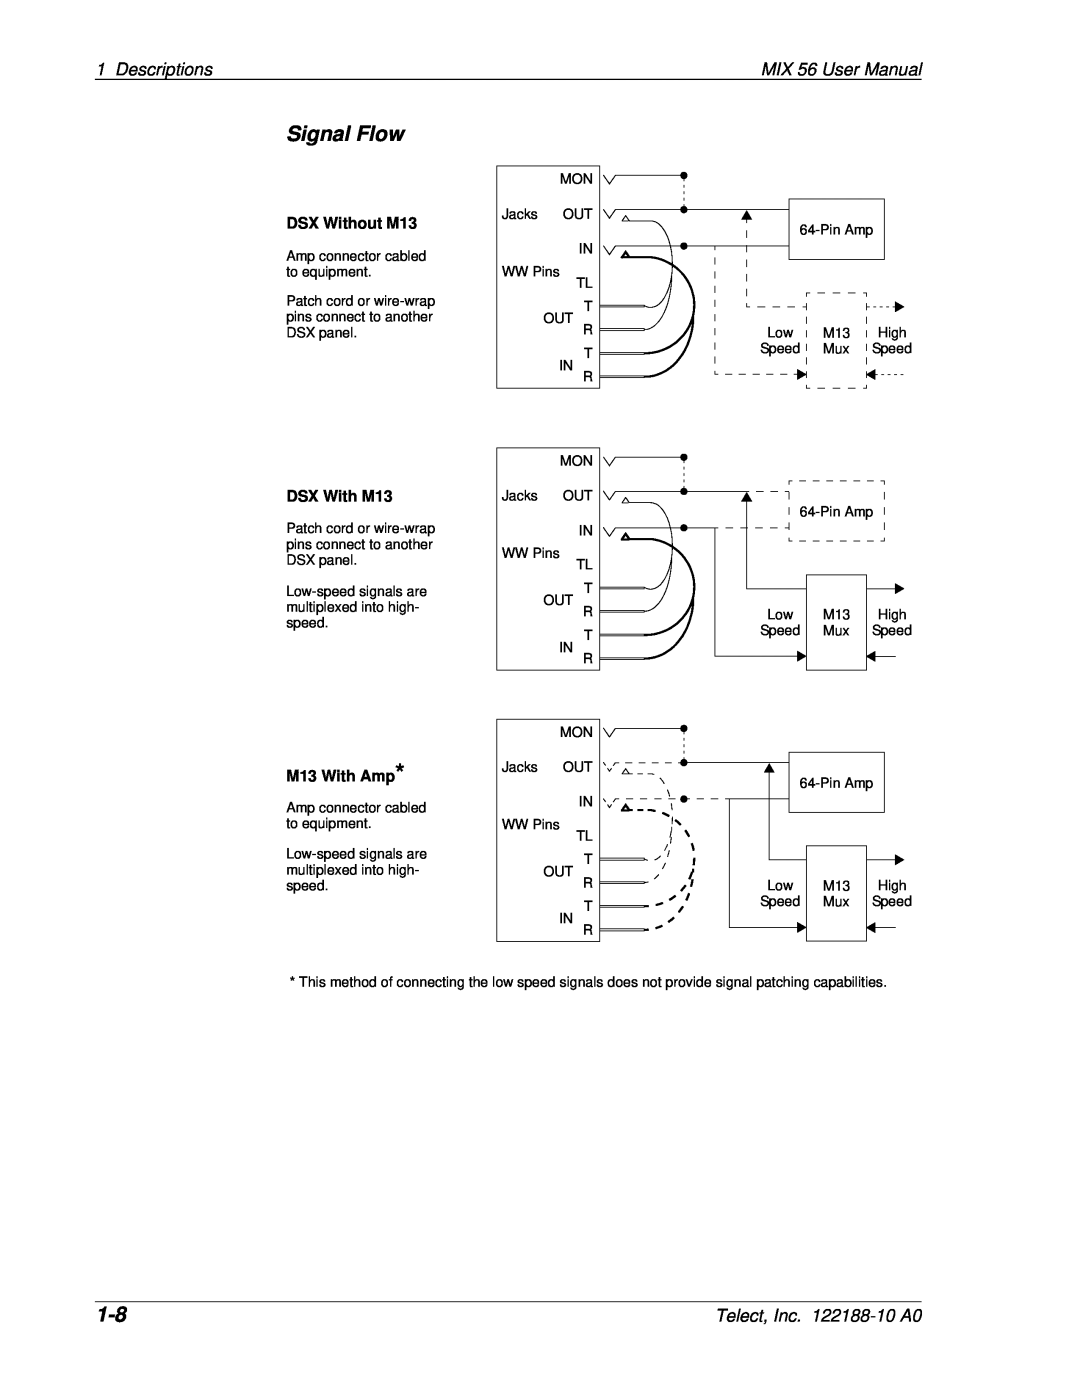 Telect Signal Flow, Descriptions, MIX 56 User Manual, Telect, Inc. 122188-10 A0, DSX Without M13, DSX With M13 